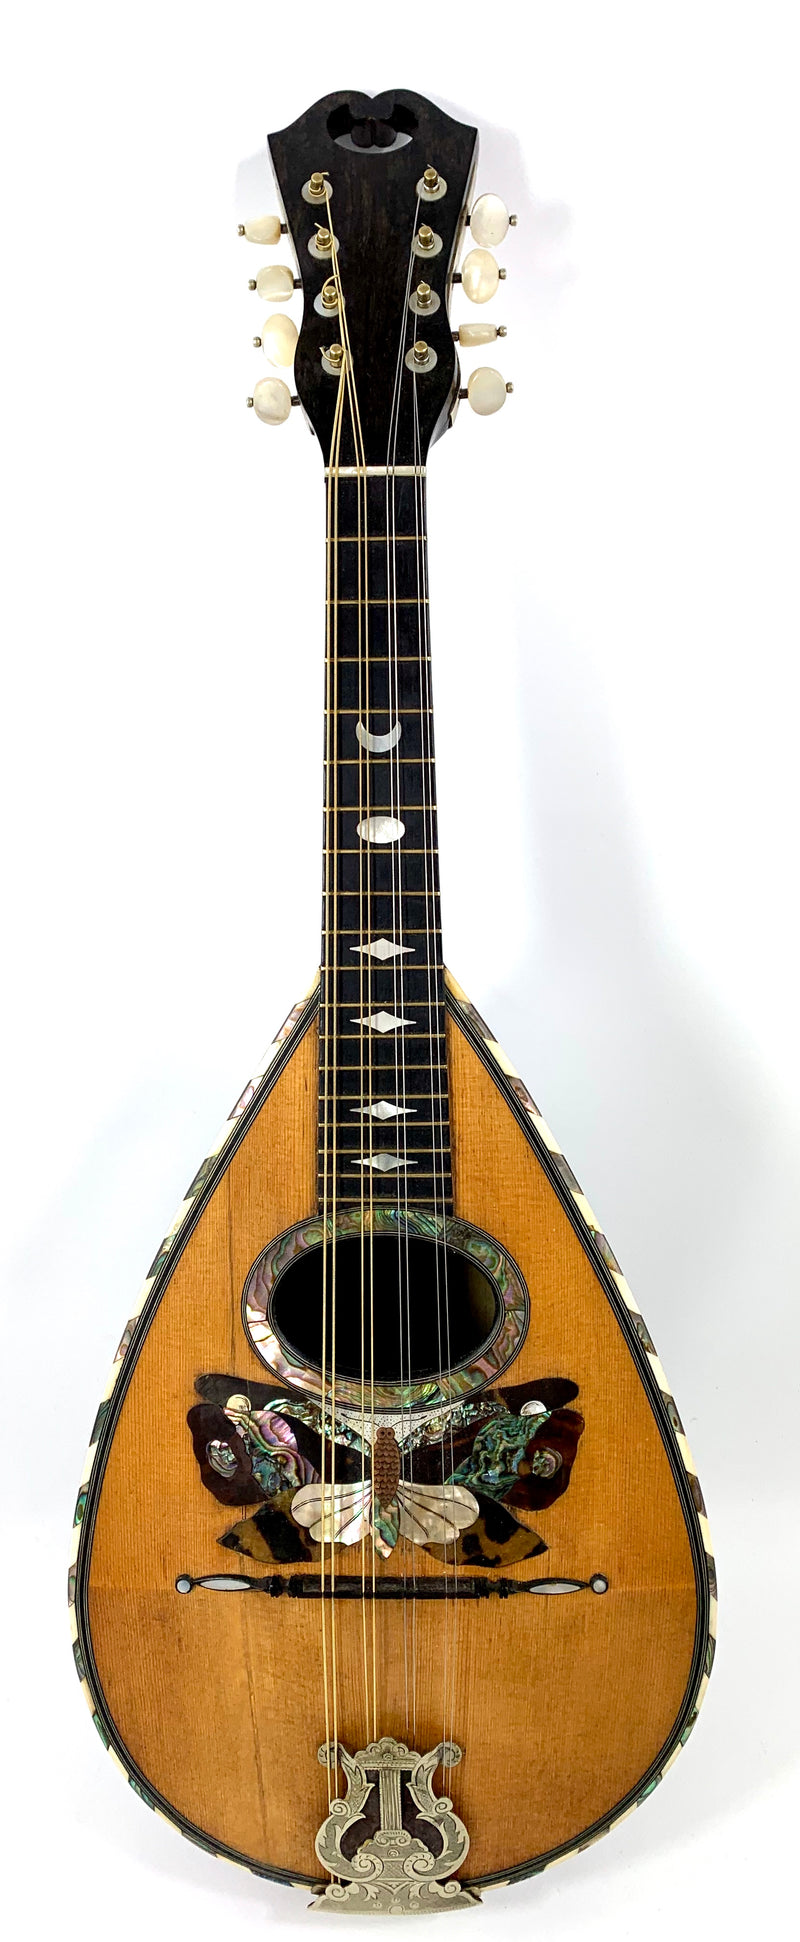 Vinaccia mandolin from 1894